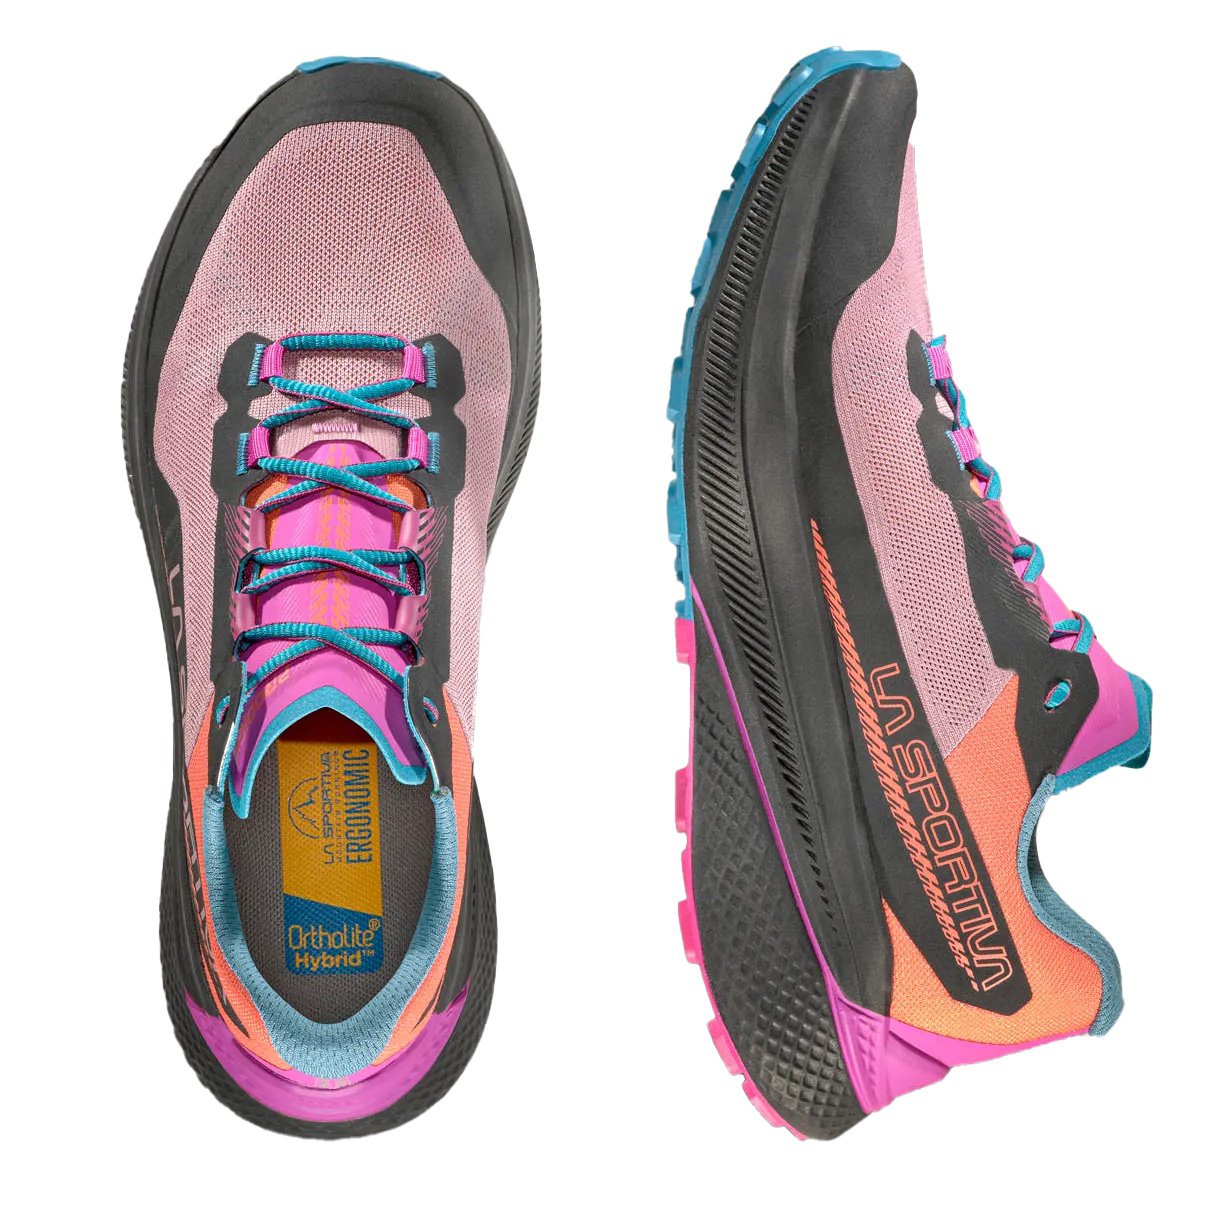 La Sportiva Prodigio Women's Trail Running Shoes